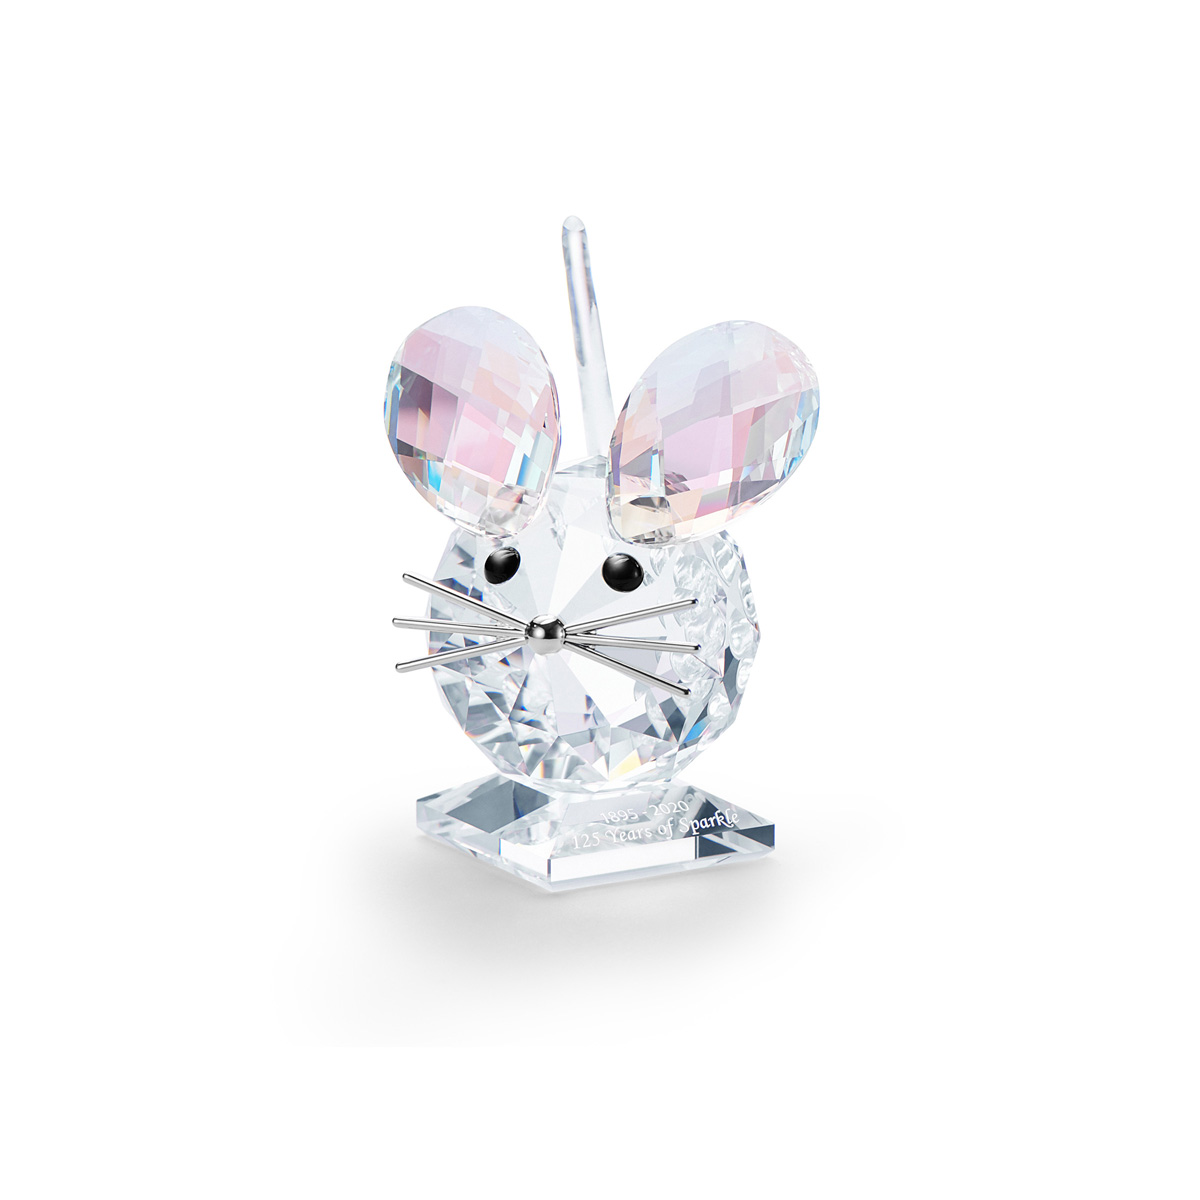 Swarovski Anniversary Mouse Limited Edition 2020